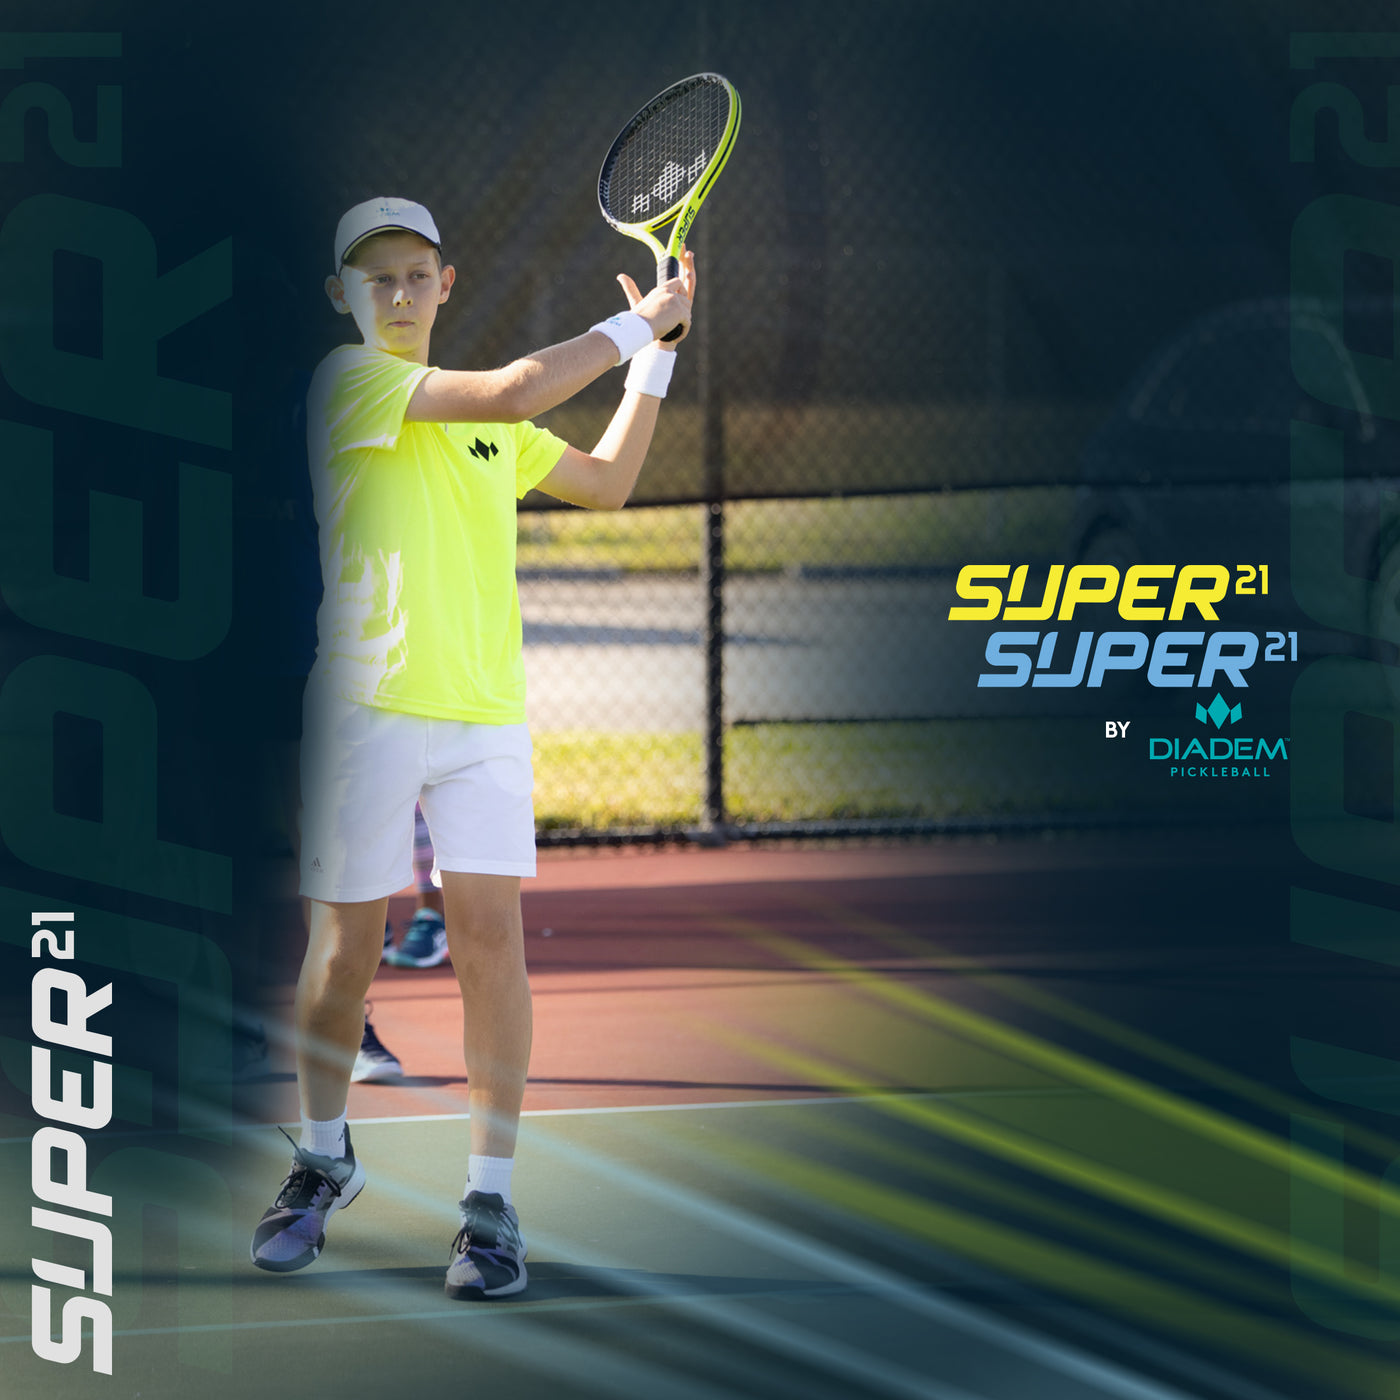 Diadem Super 21 Junior Racket - Diadem Sports